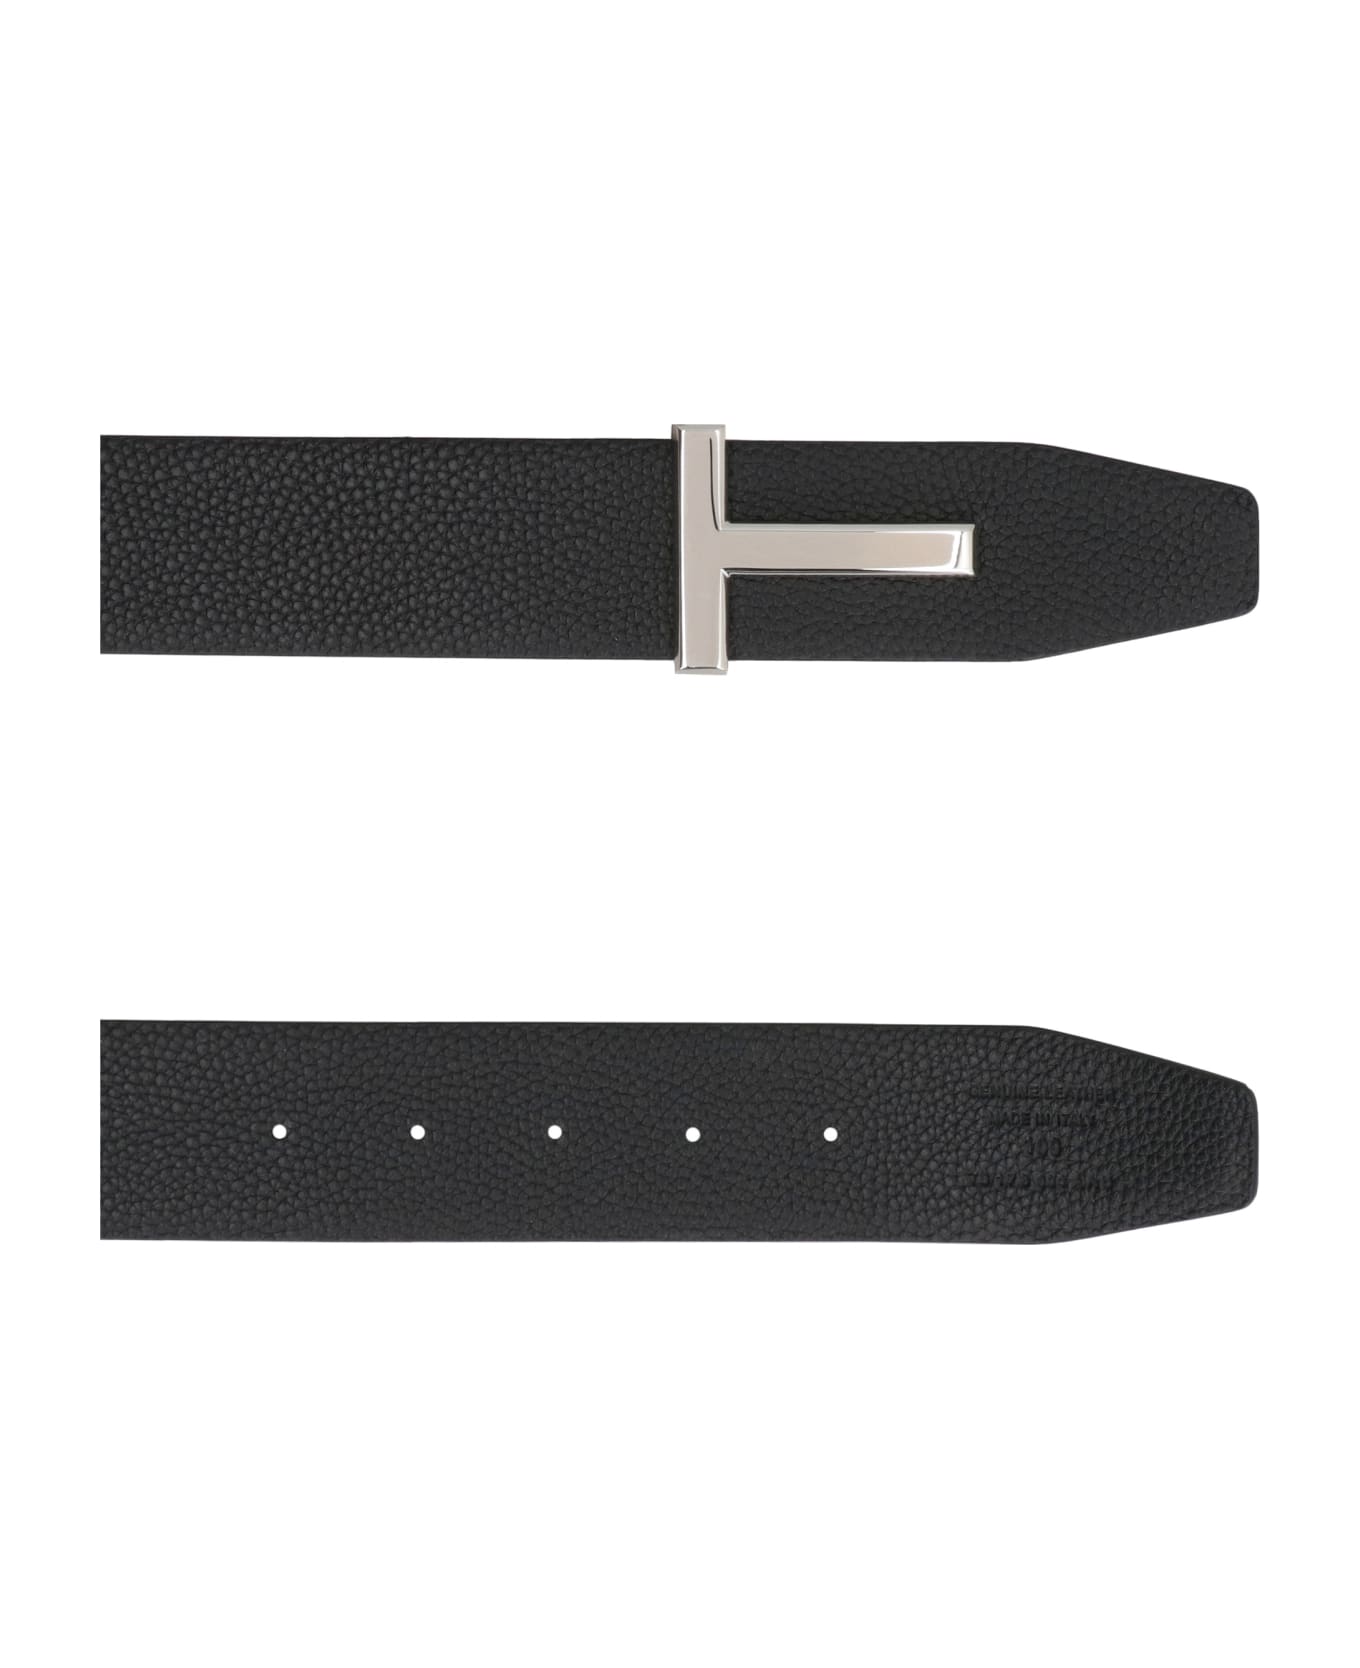 Tom Ford Grainy Leather Belt - DARK NAVY BLACK